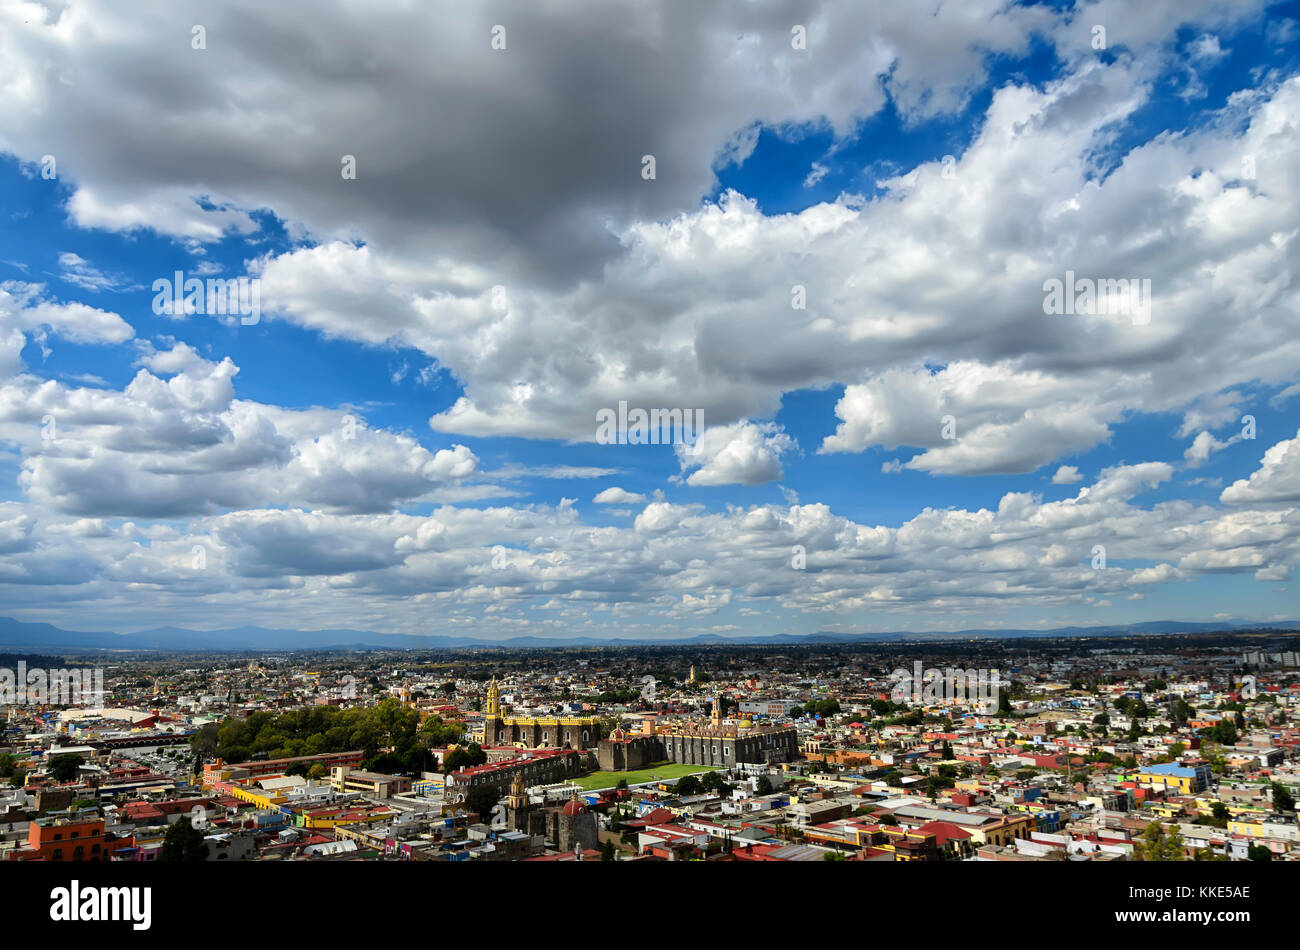 Cholula, Mexiko, 16. Oktober, 2015: Luftbild der Innenstadt von cholula Stadt unter bewölktem Himmel Stockfoto